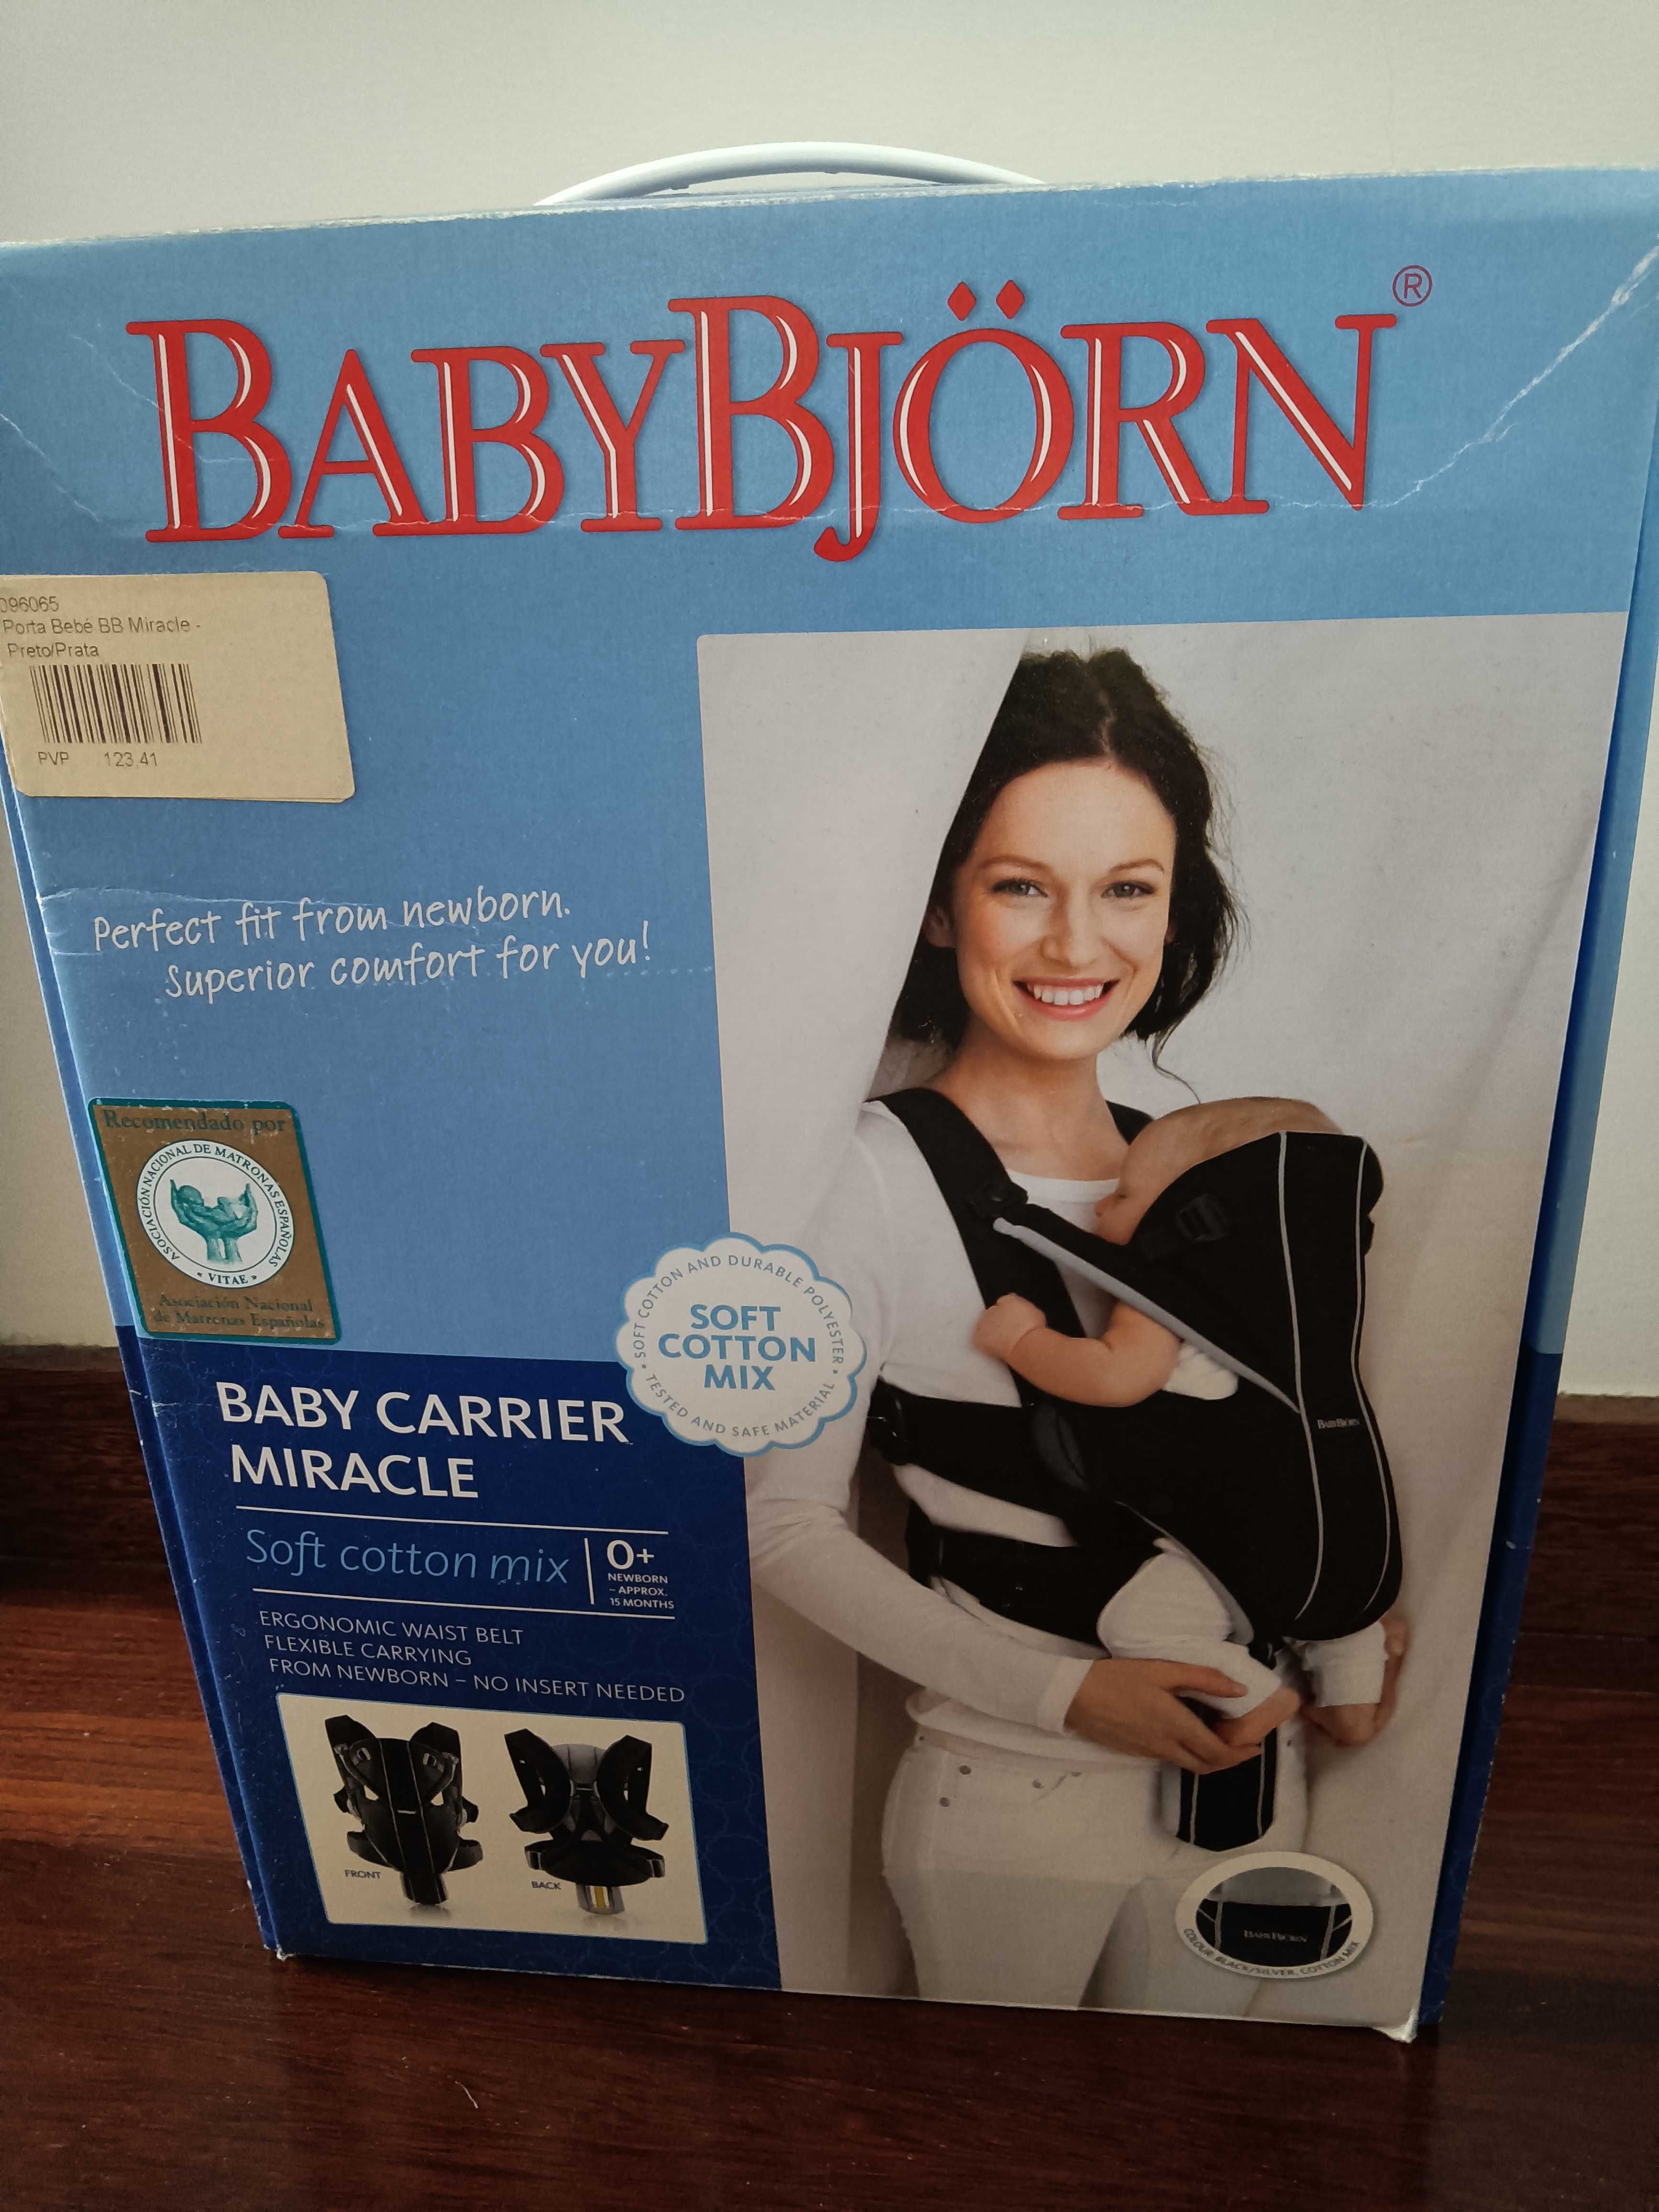 Marsúpio BabyBjorn (modelo baby carrier miracle)